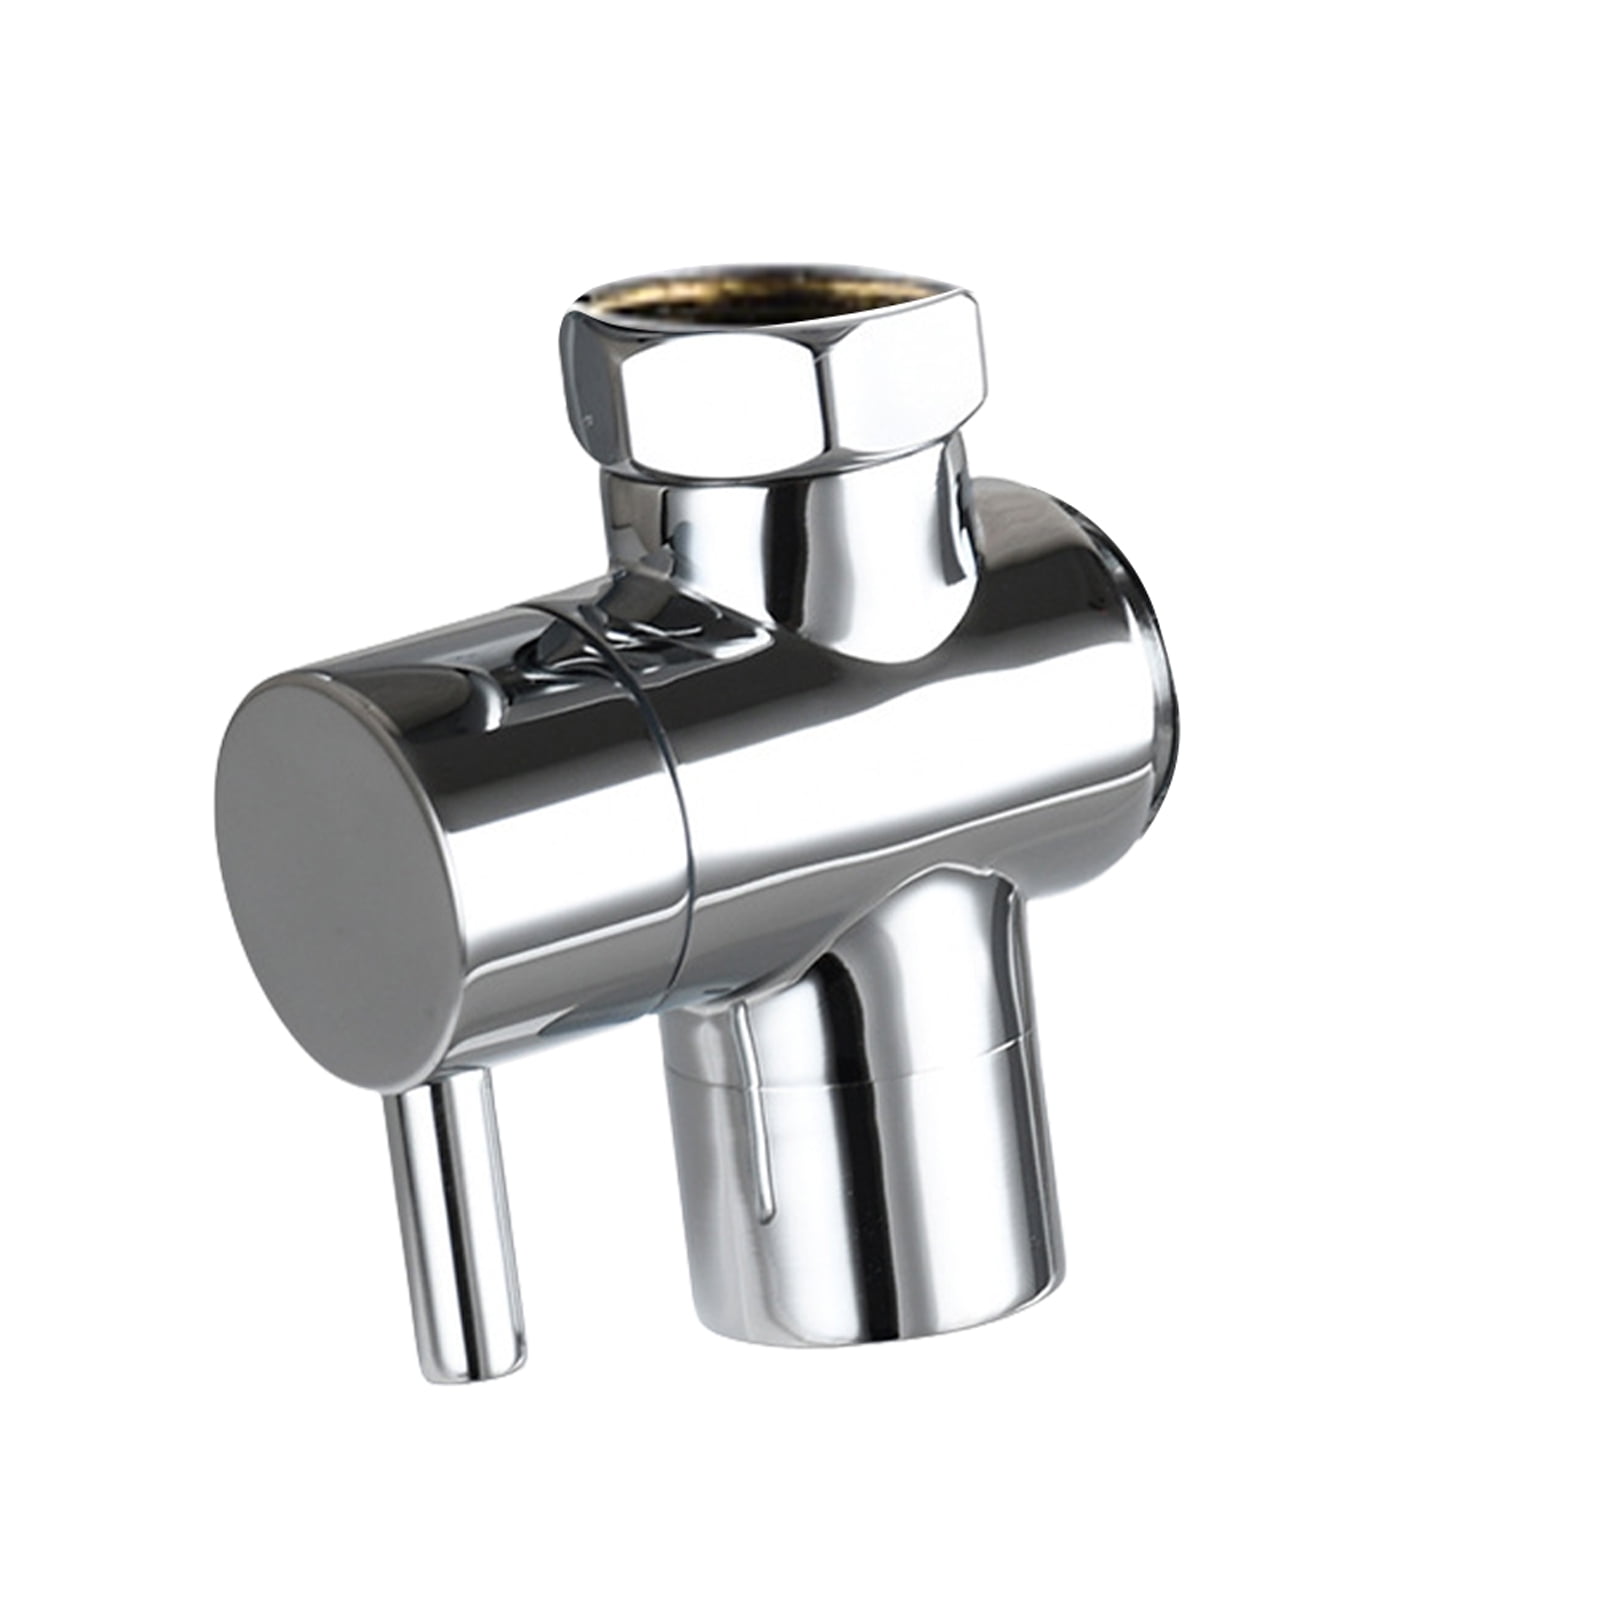 Details about   Diverter Aerator Shower Basin Faucet Spout Replacement Part For Sink Mixer Tap 